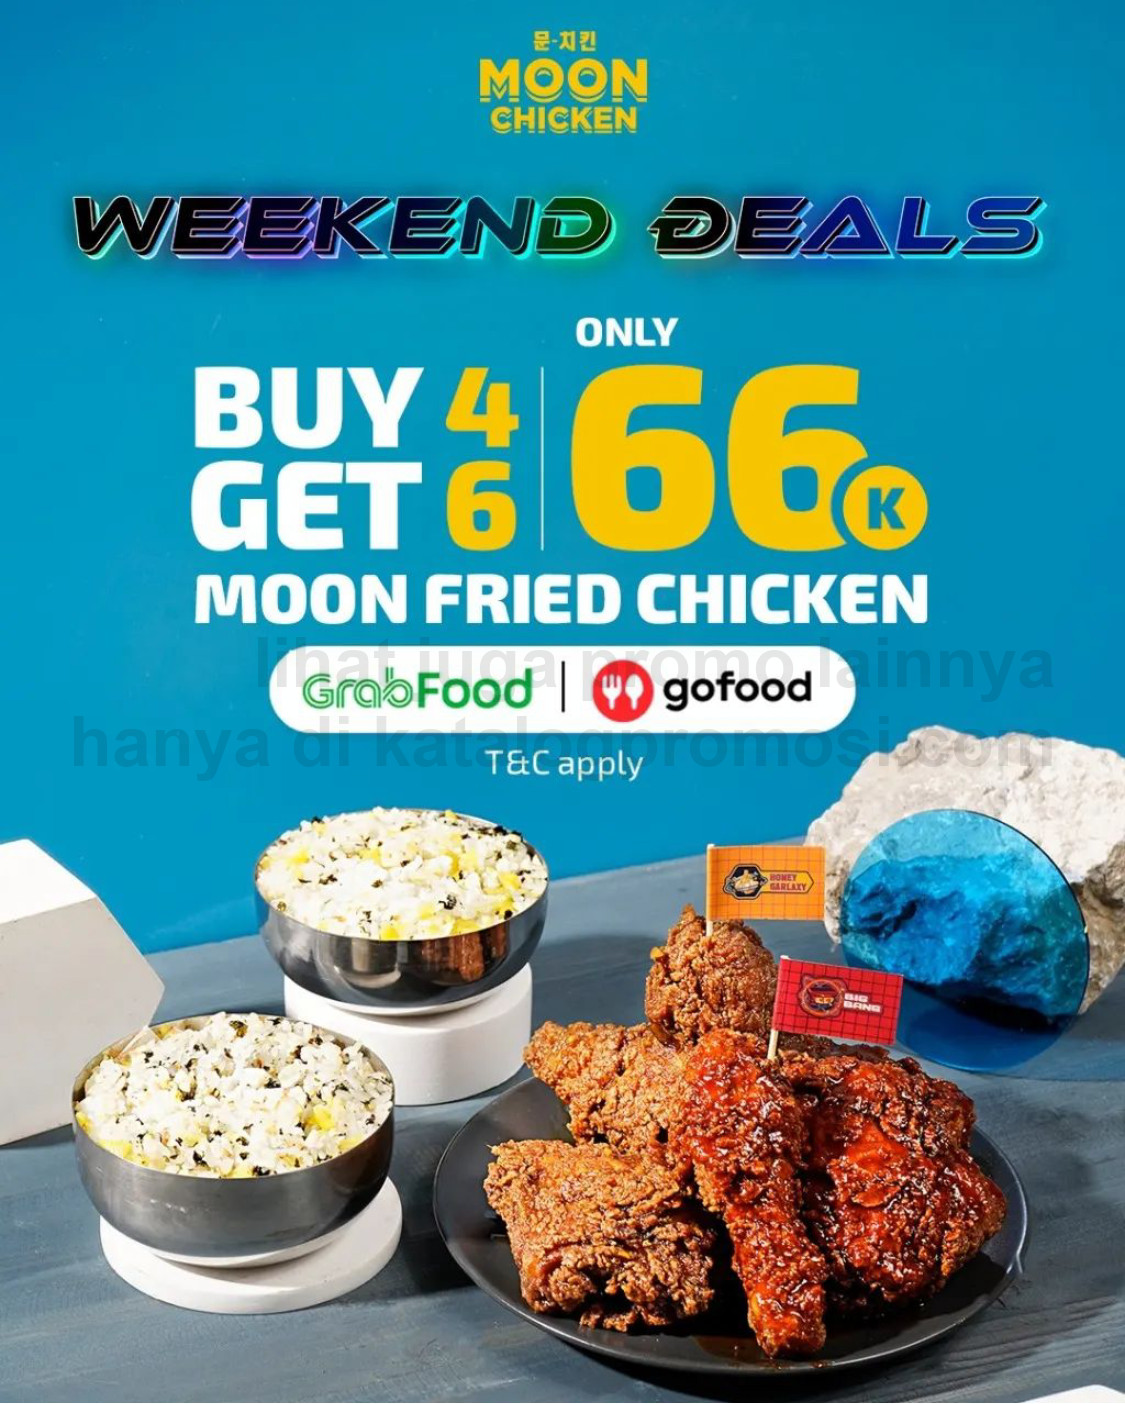 Promo MOON CHICKEN Weekend Deals -  buy 4 get 6 Moon Fried Chicken KHUSUS PEMESANAN VIA GRABFOOD/GOFOOD